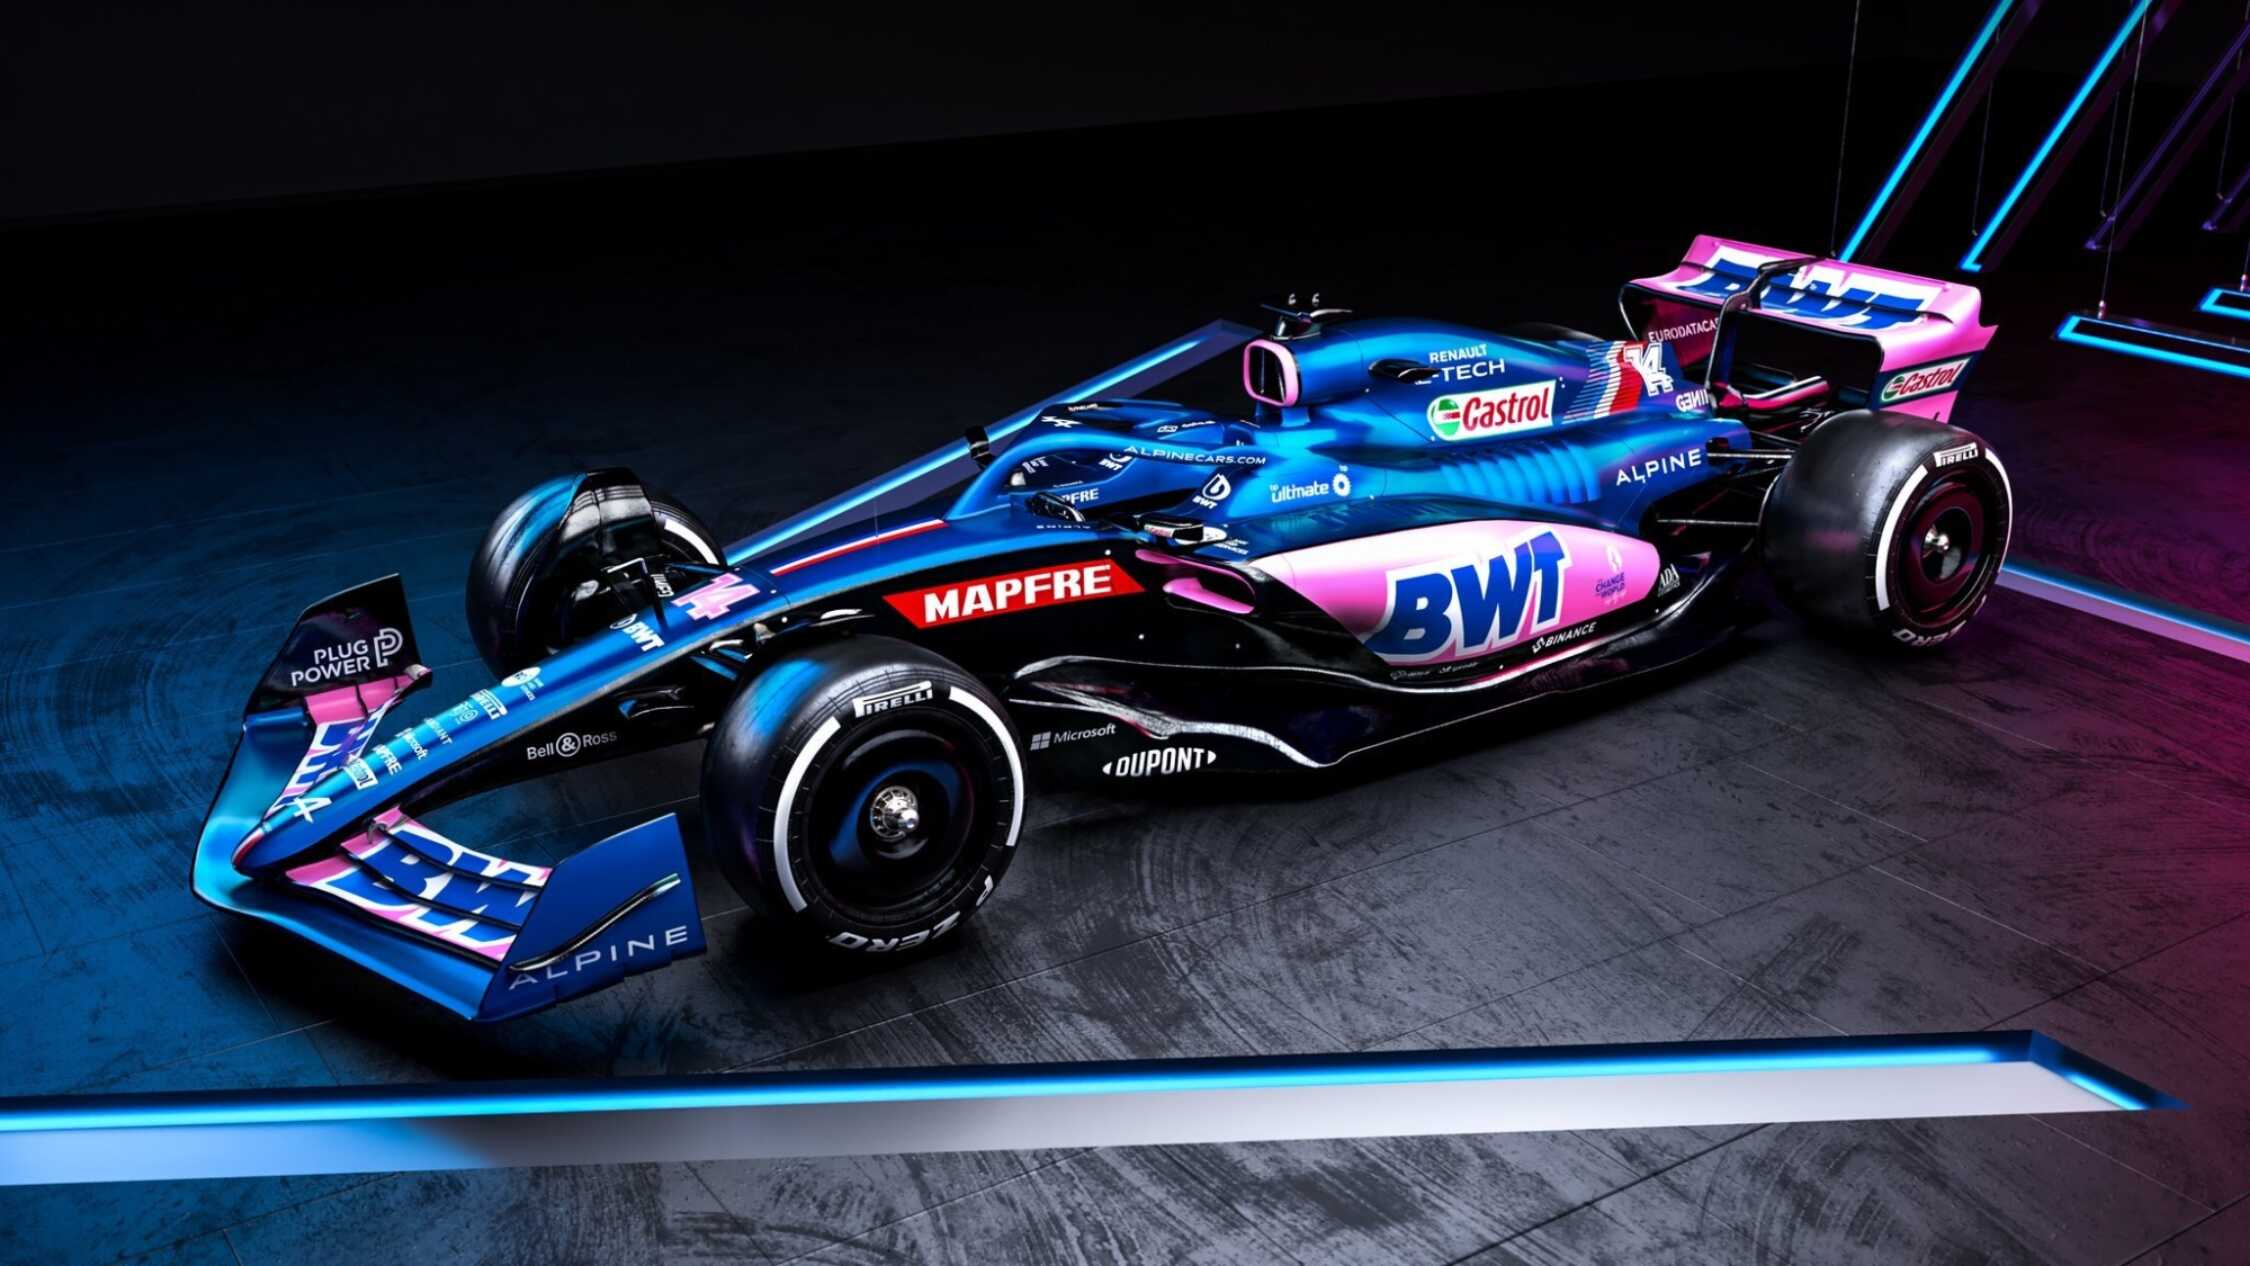 Alpine show off spectacular new F1 car for 2022 season